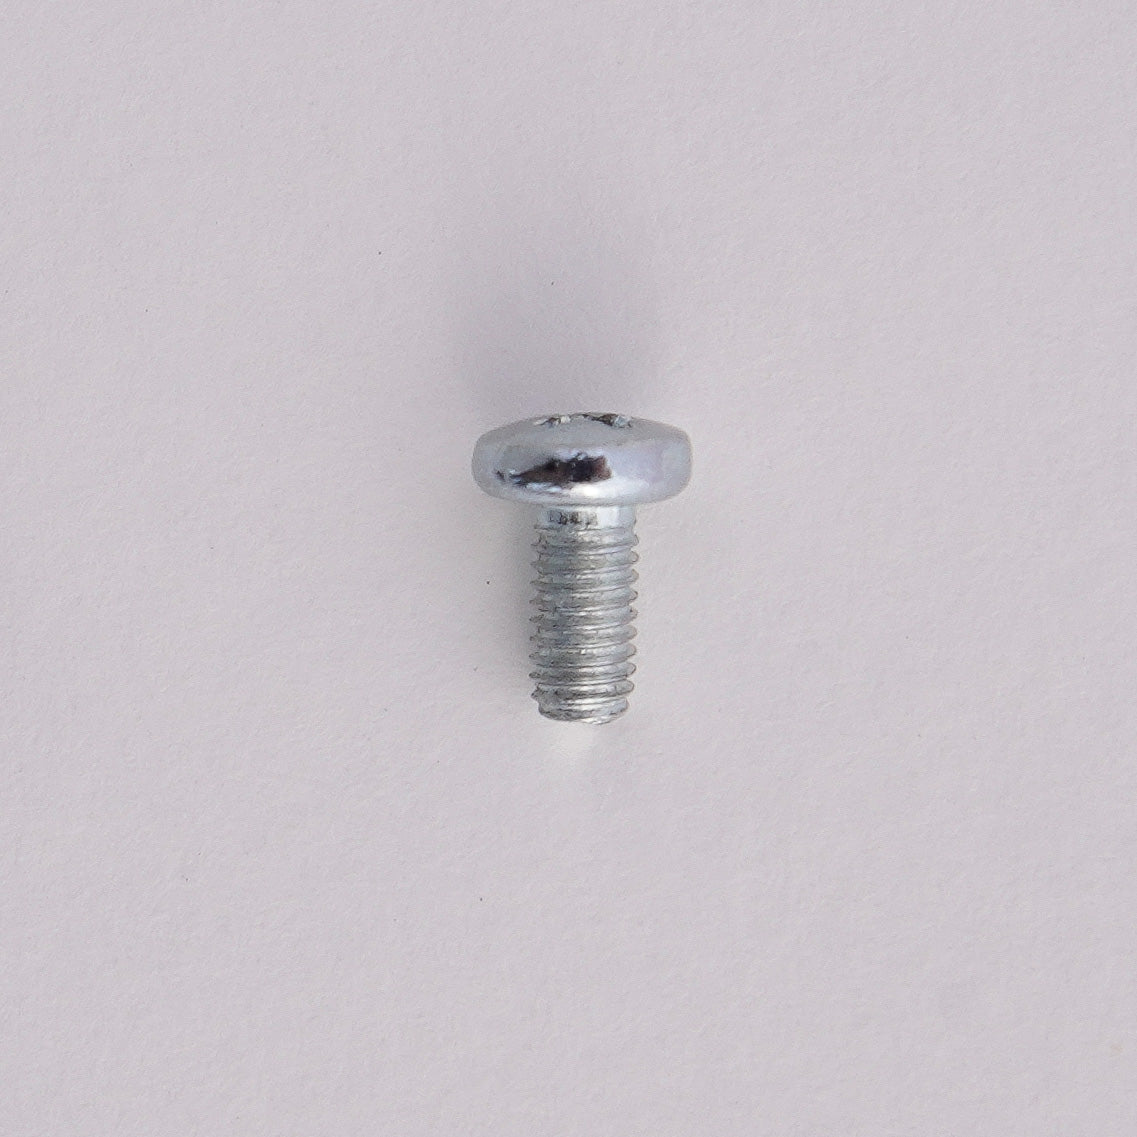 M3x6 module screws (bag with 100 pieces)